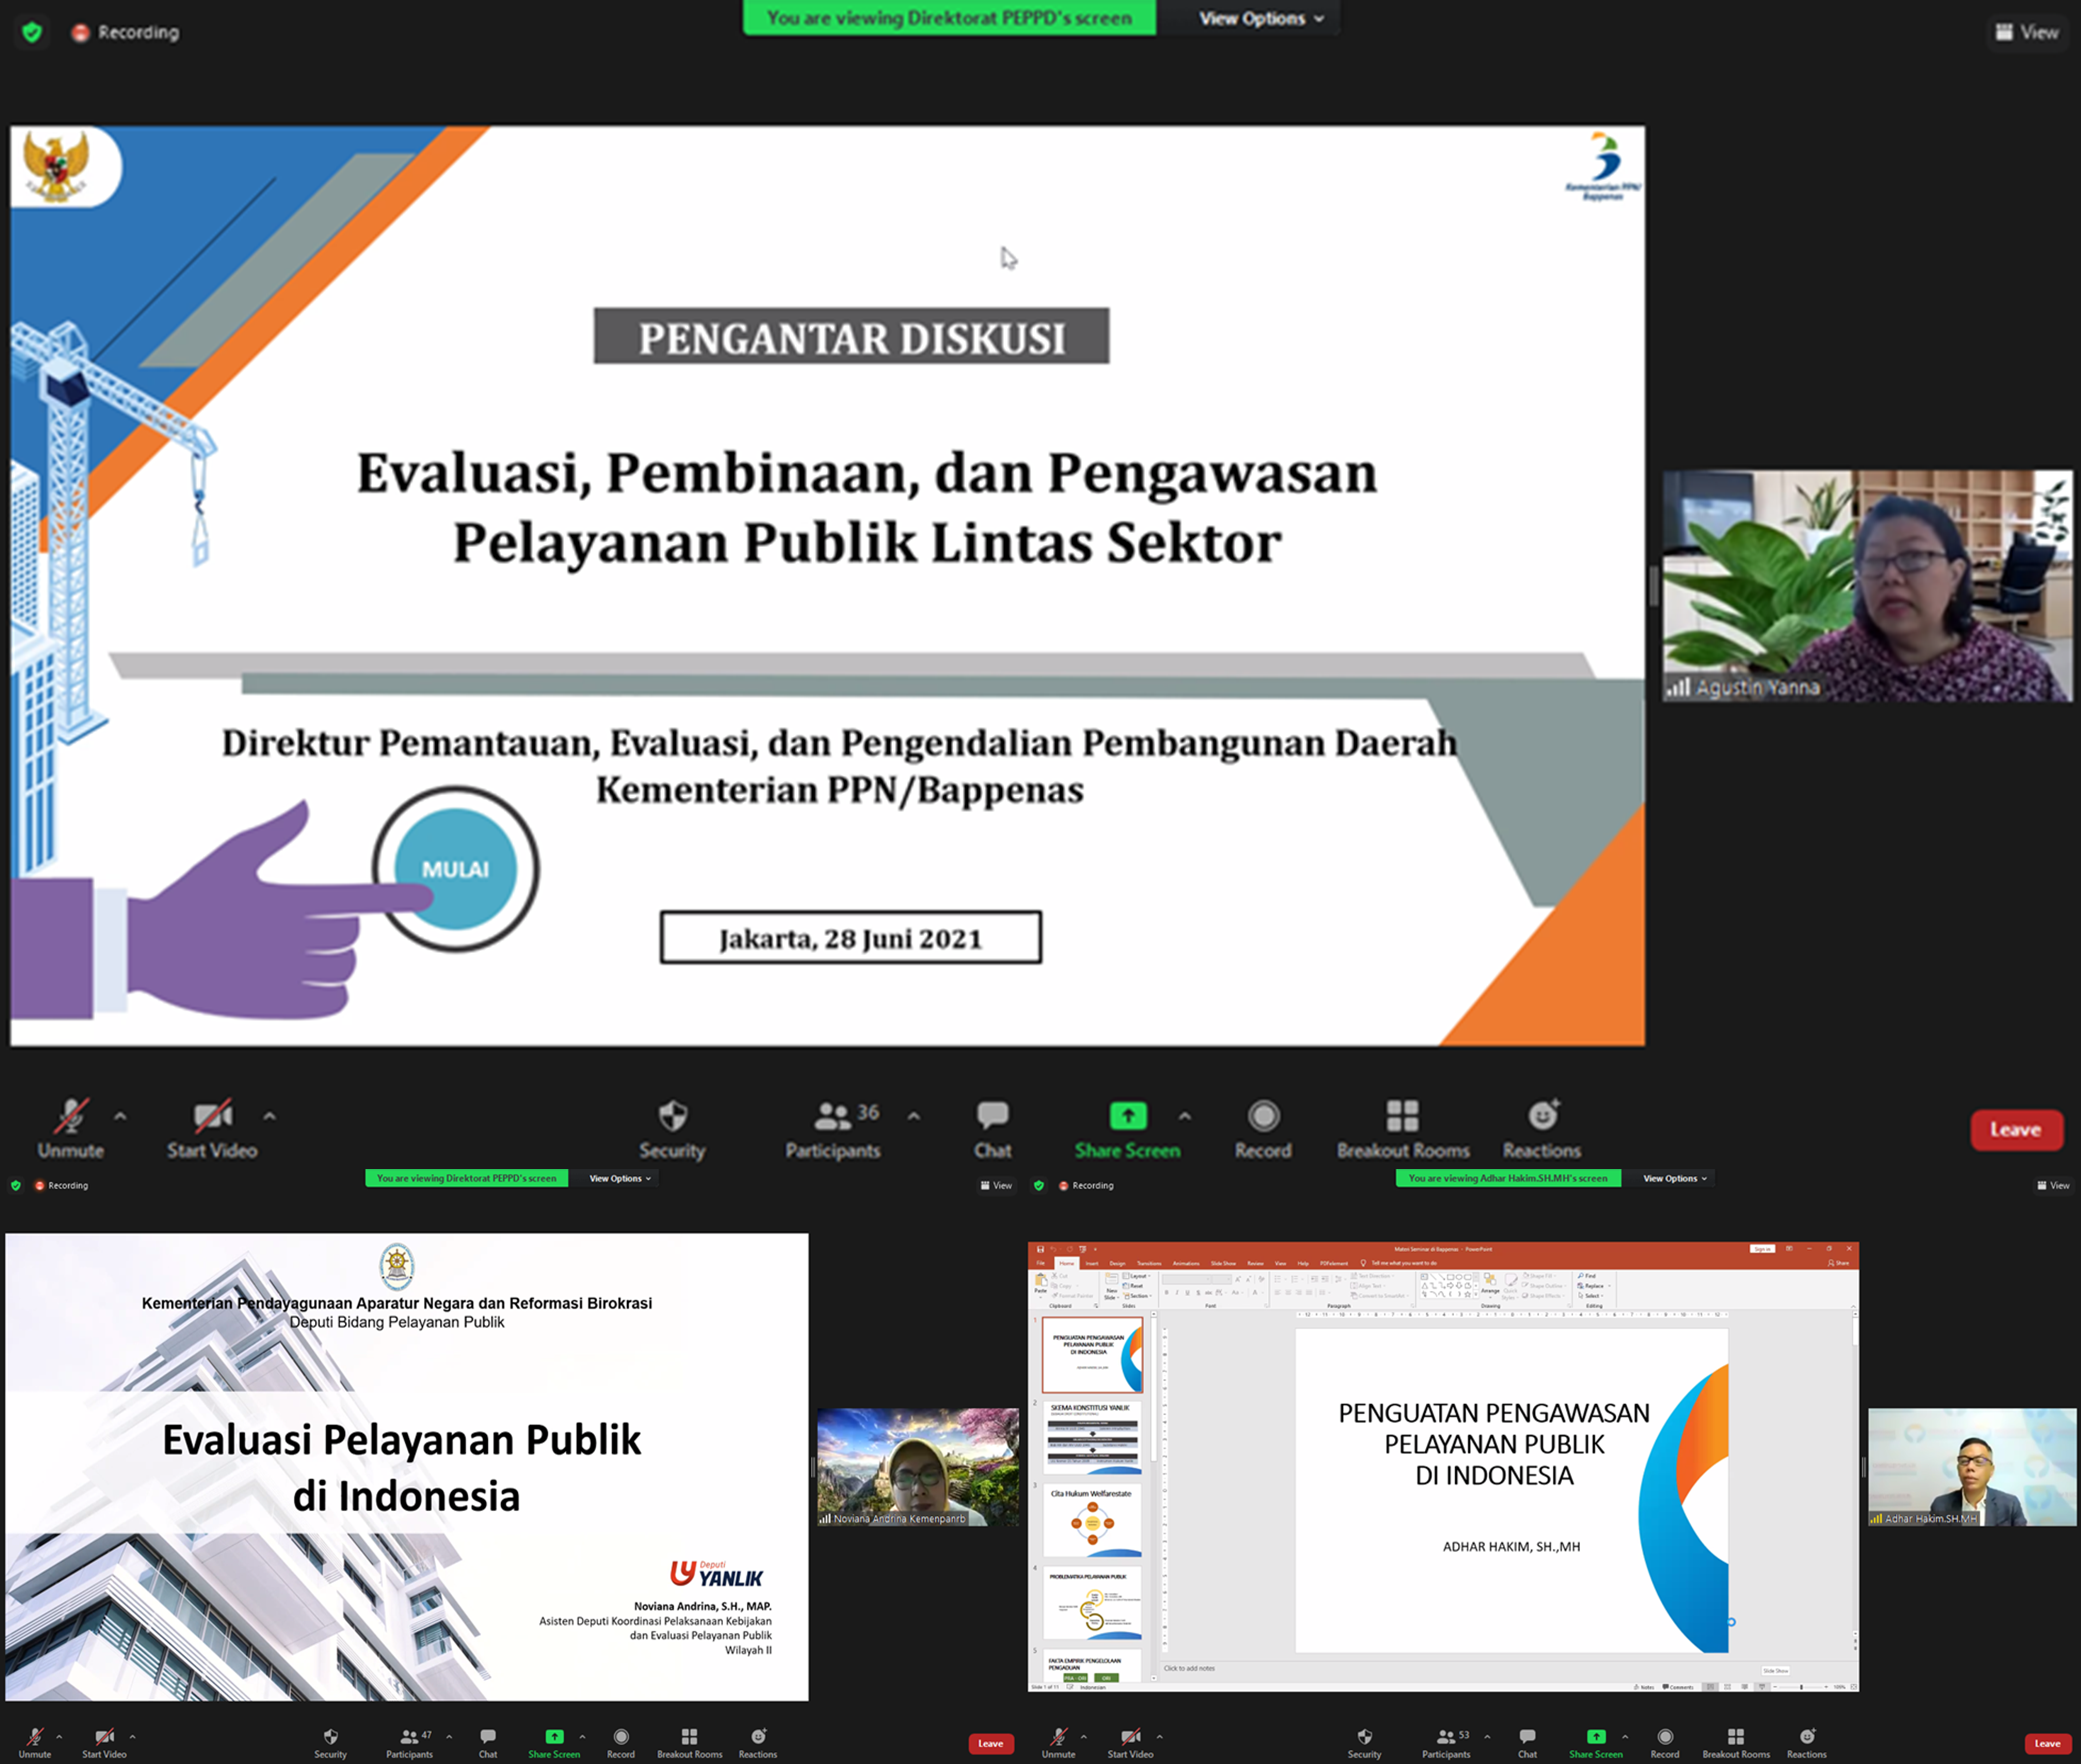 Pentingnya Kolaborasi Lintas Sektor dalam Evaluasi, Pembinaan, dan Pengawasan Pelayanan Publik di Indonesia